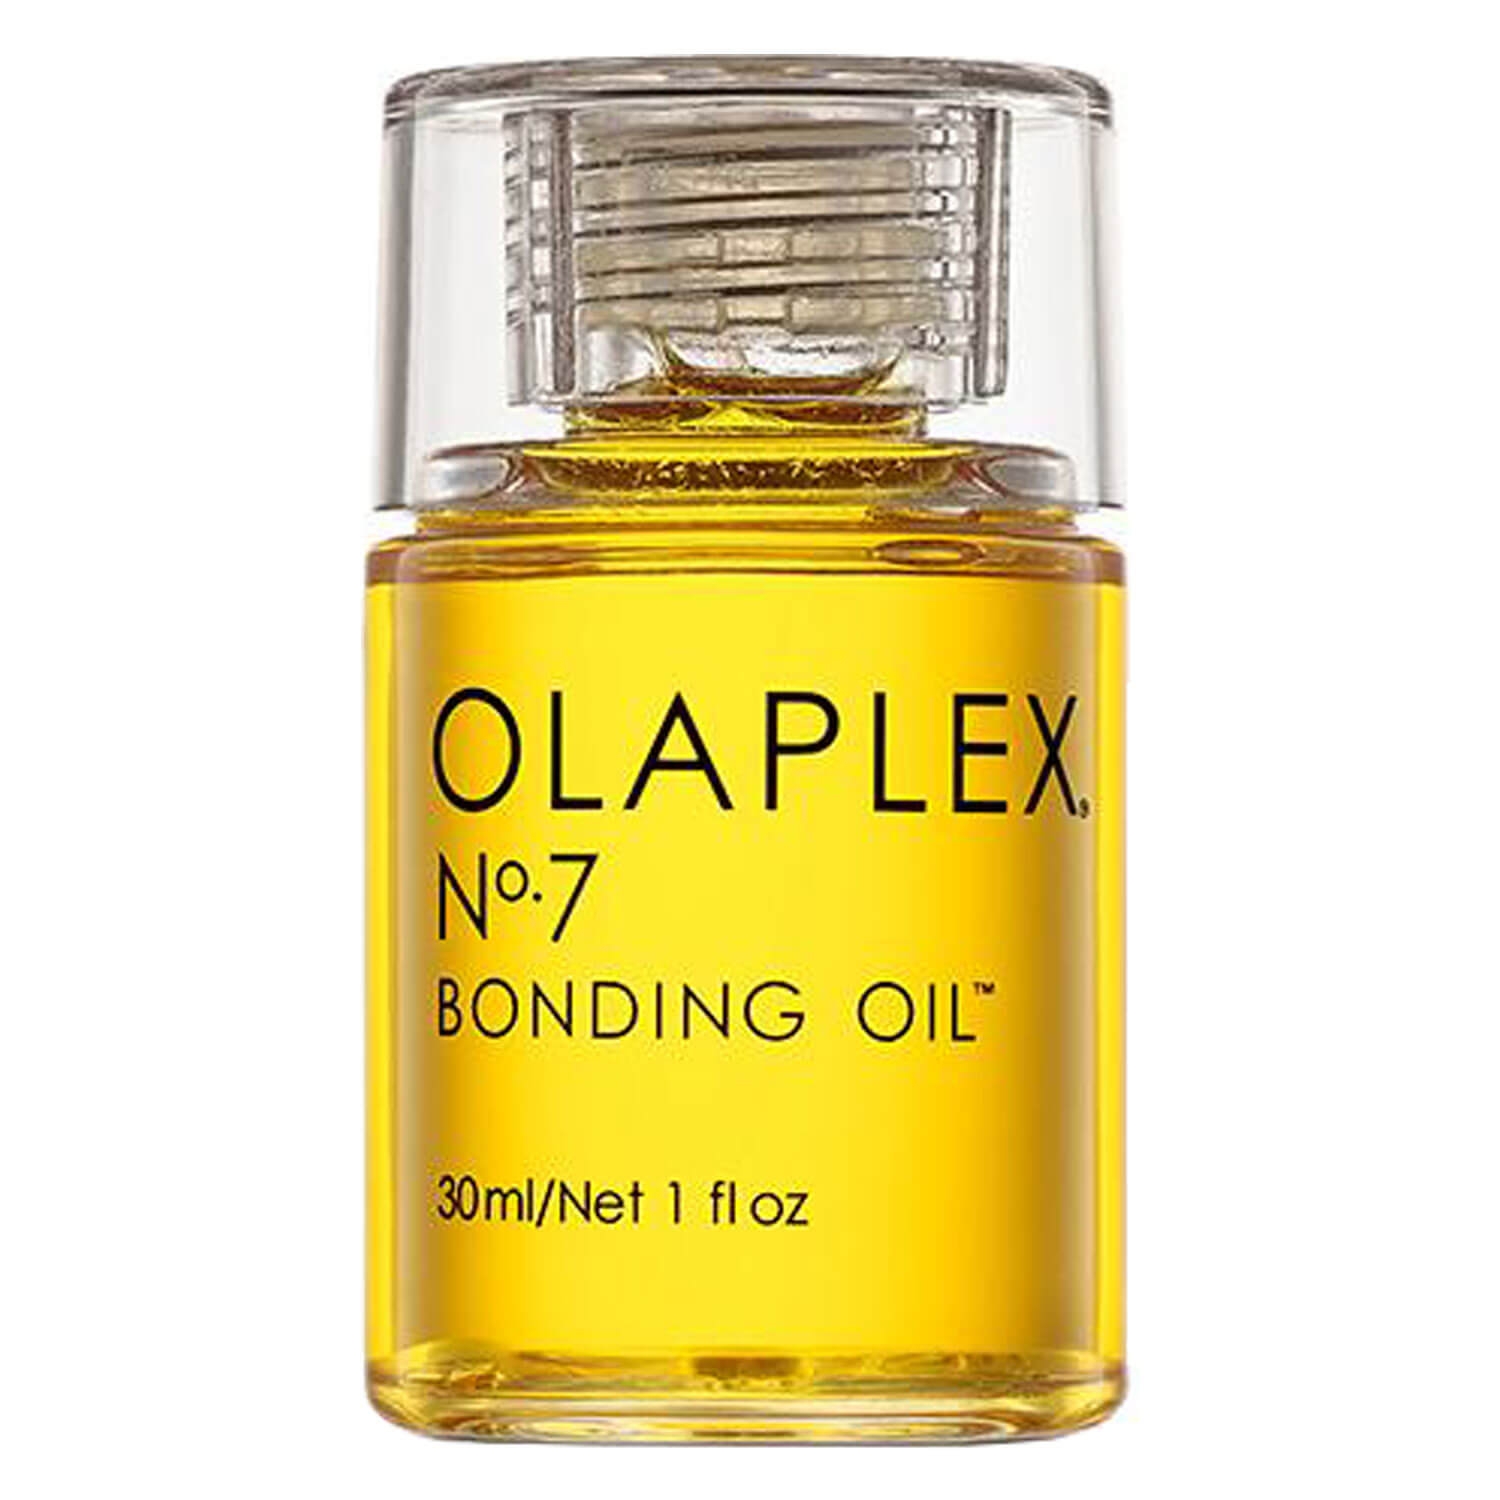 Produktbild von Olaplex - Bonding Oil No. 7